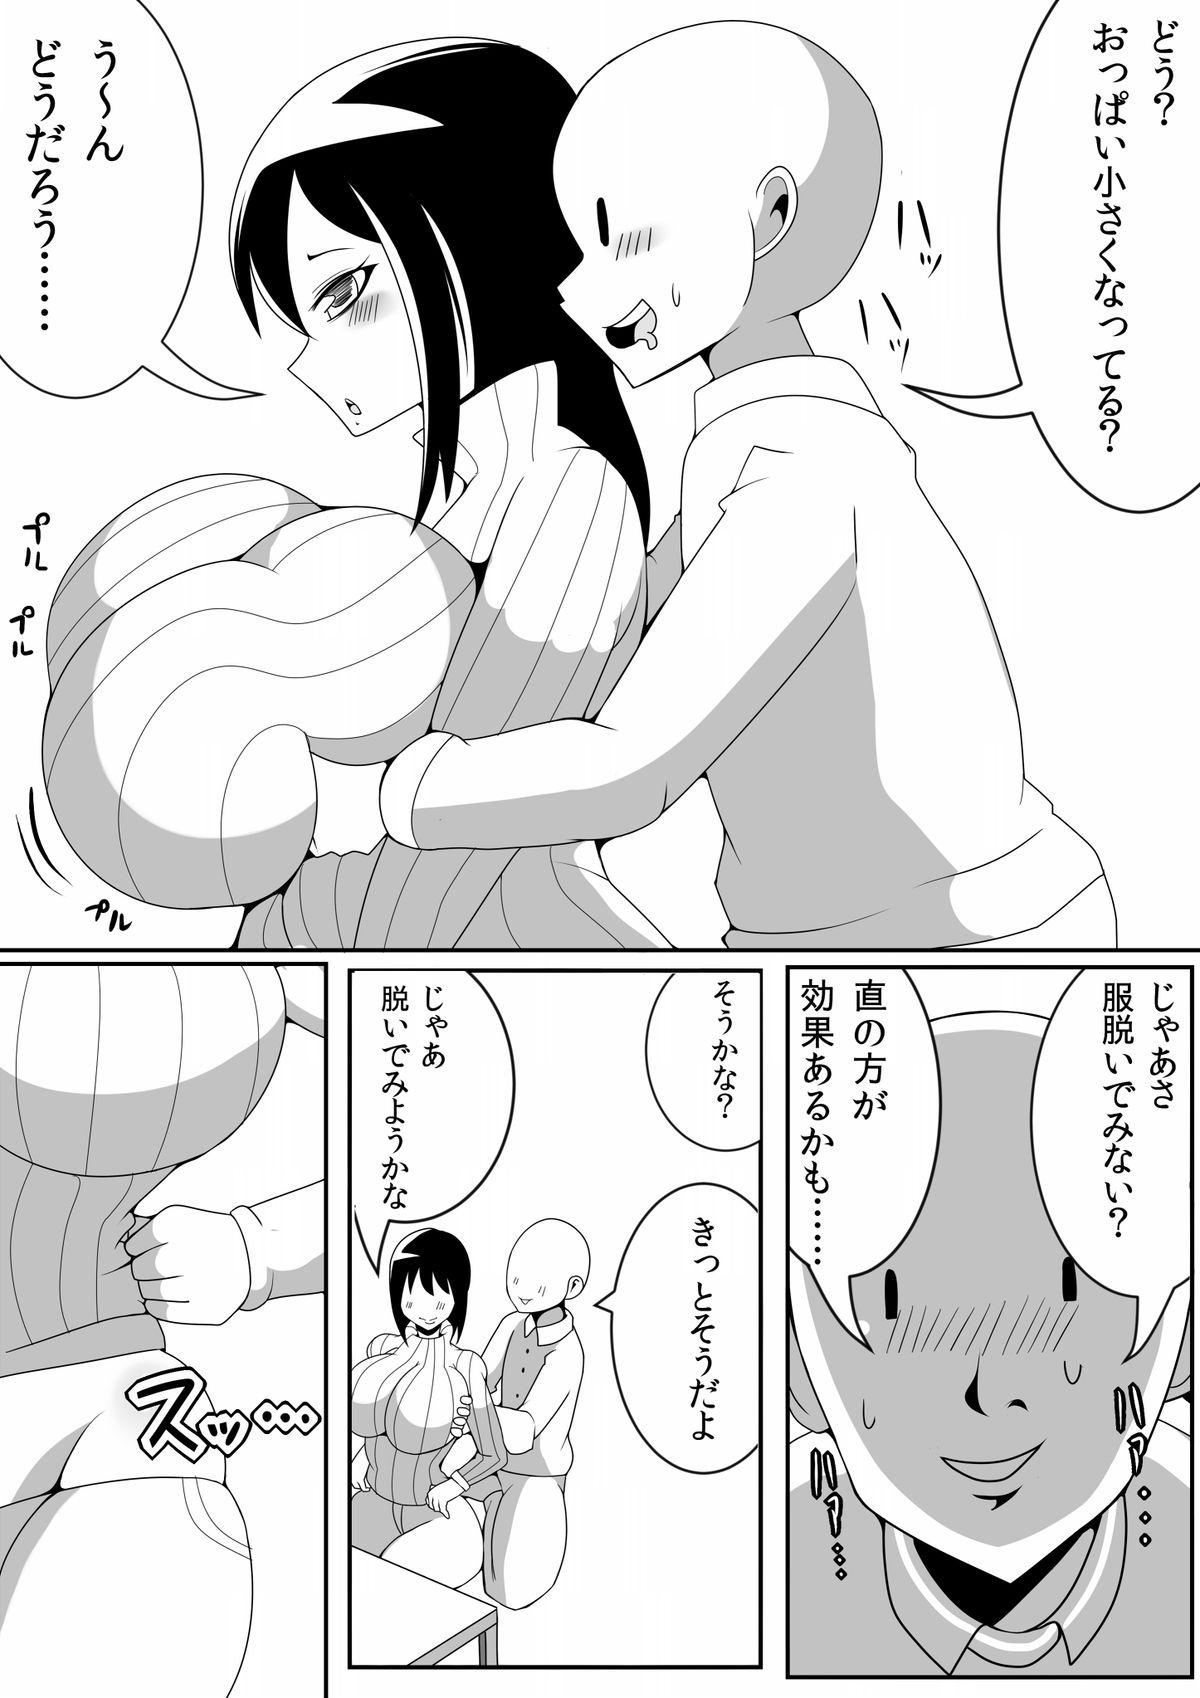 Teensex Asaokitara Oppai Konnani ga Okkiku Nacchatta Masturbating - Page 10